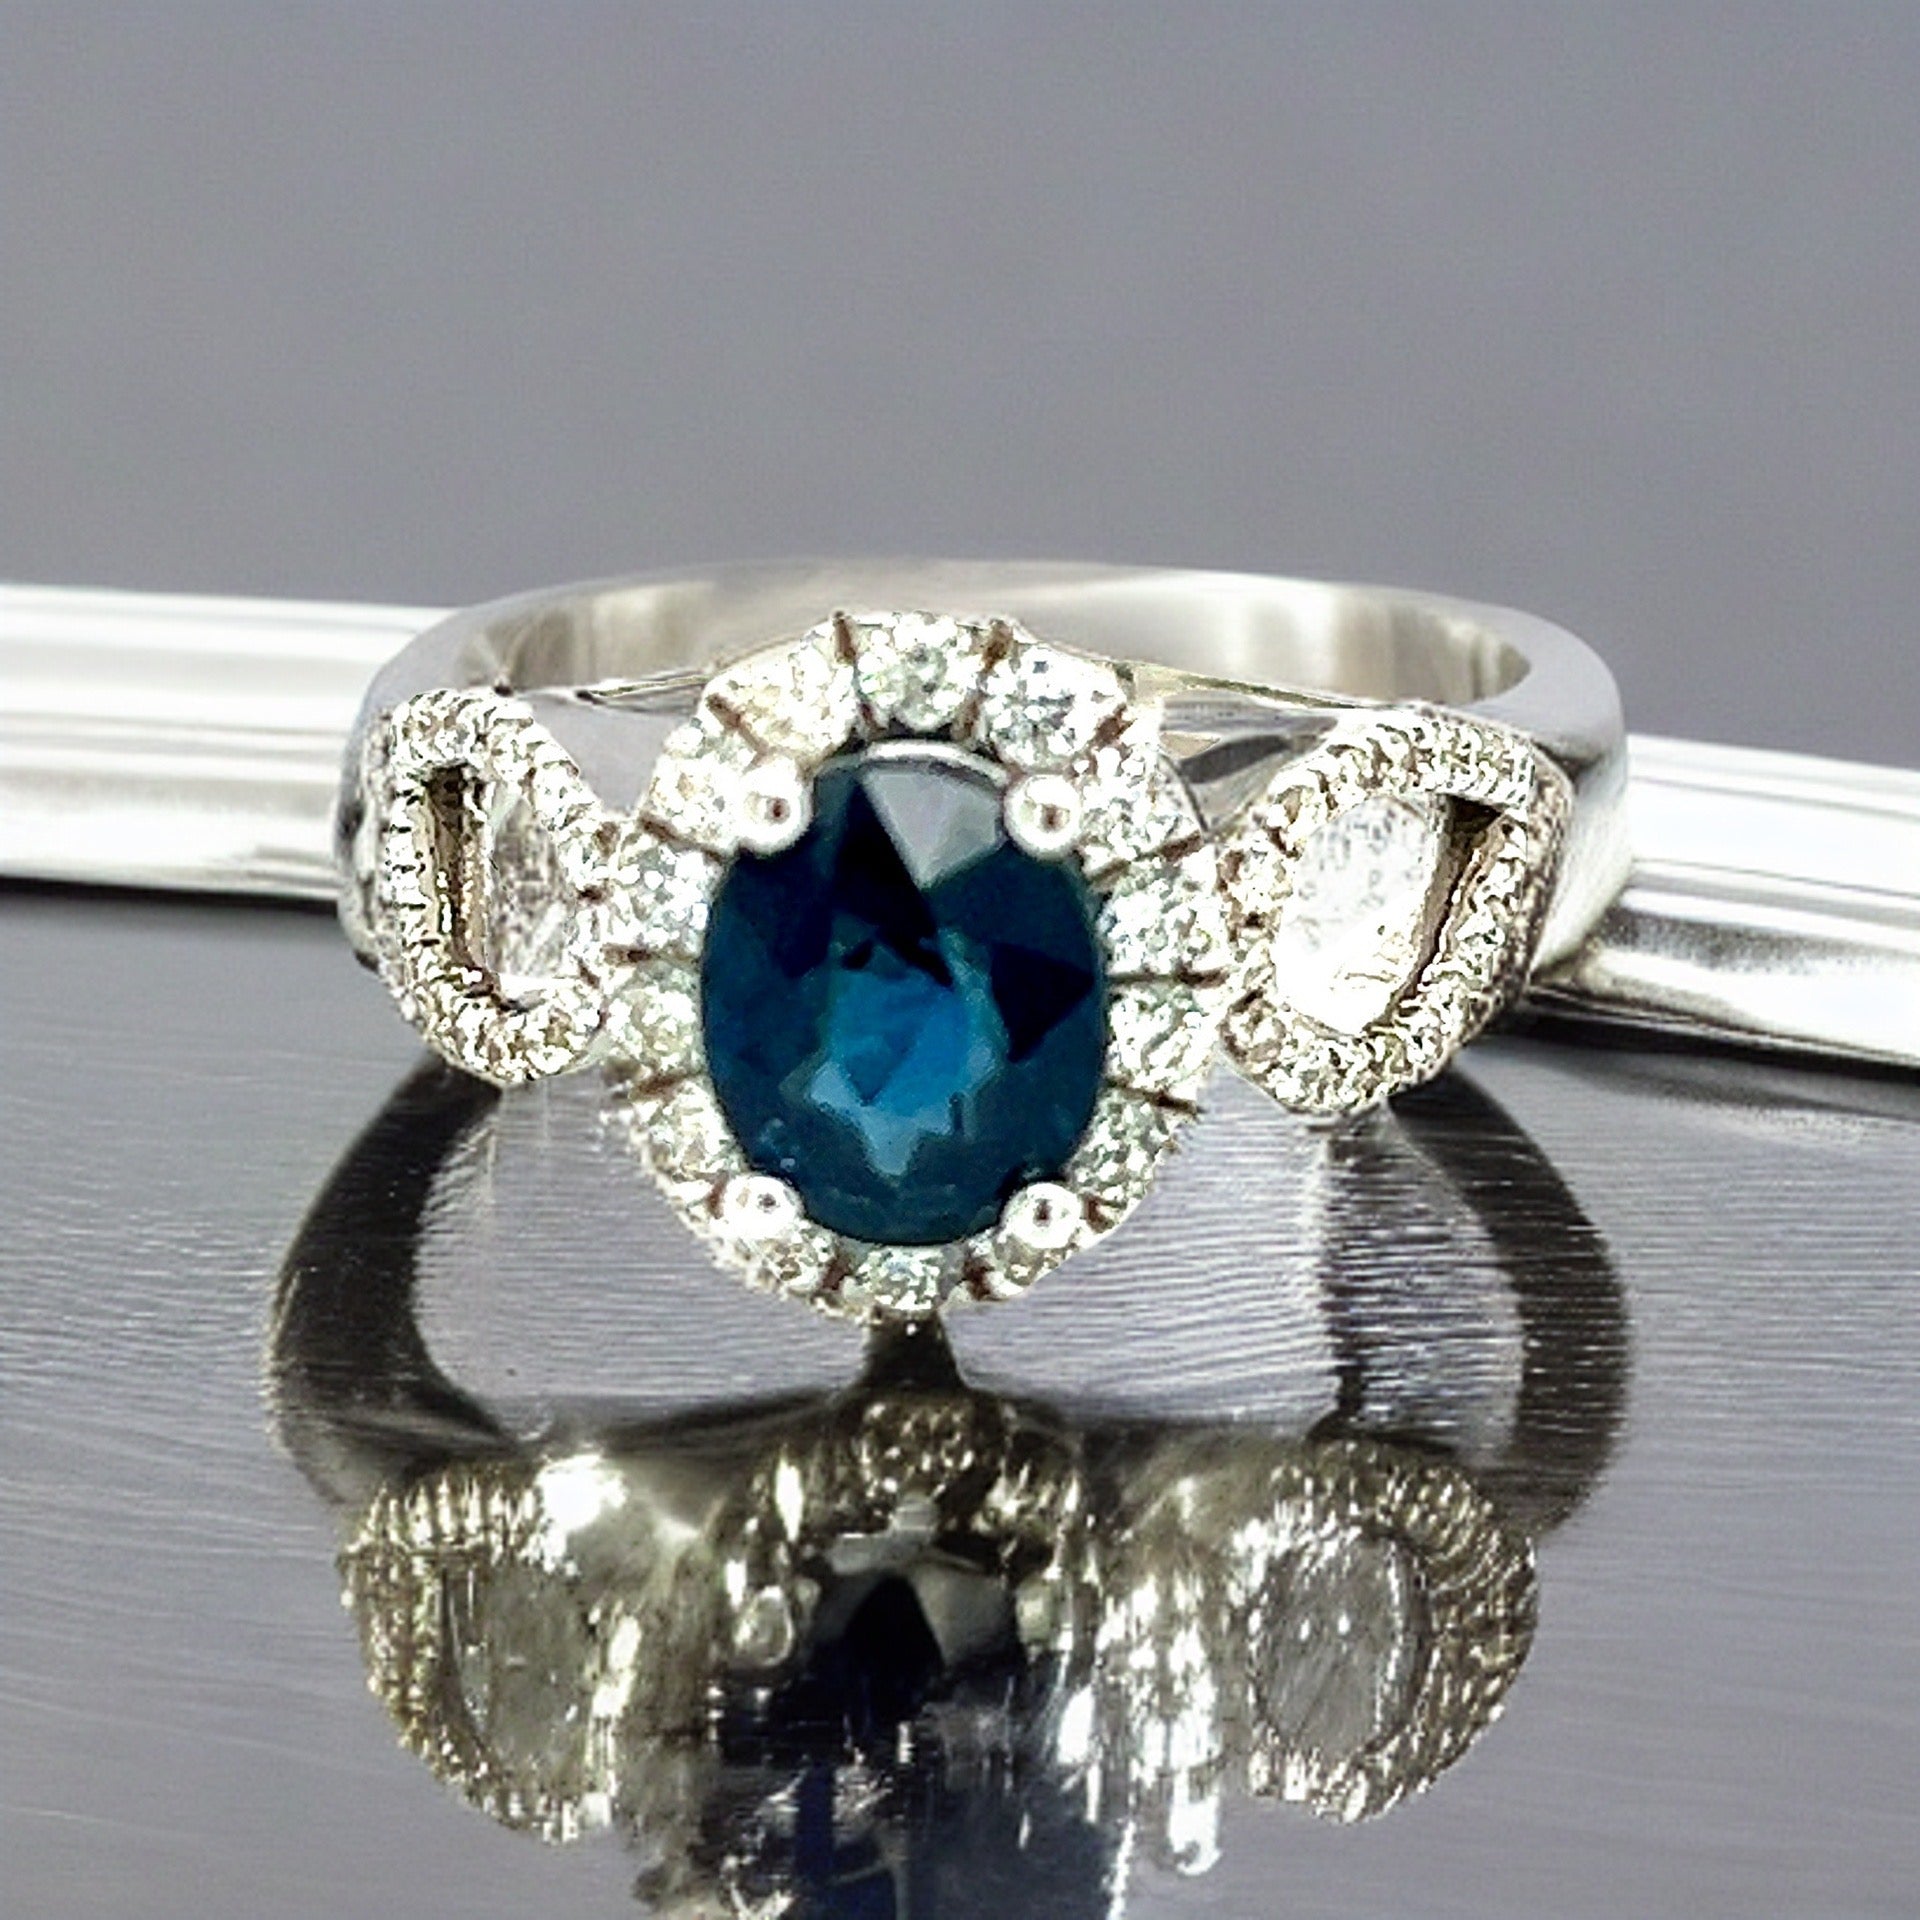 Natural Sapphire Diamond Ring Size 6.25 14k W Gold 2.93 TCW Certified $5,950 216682 - Certified Fine Jewelry